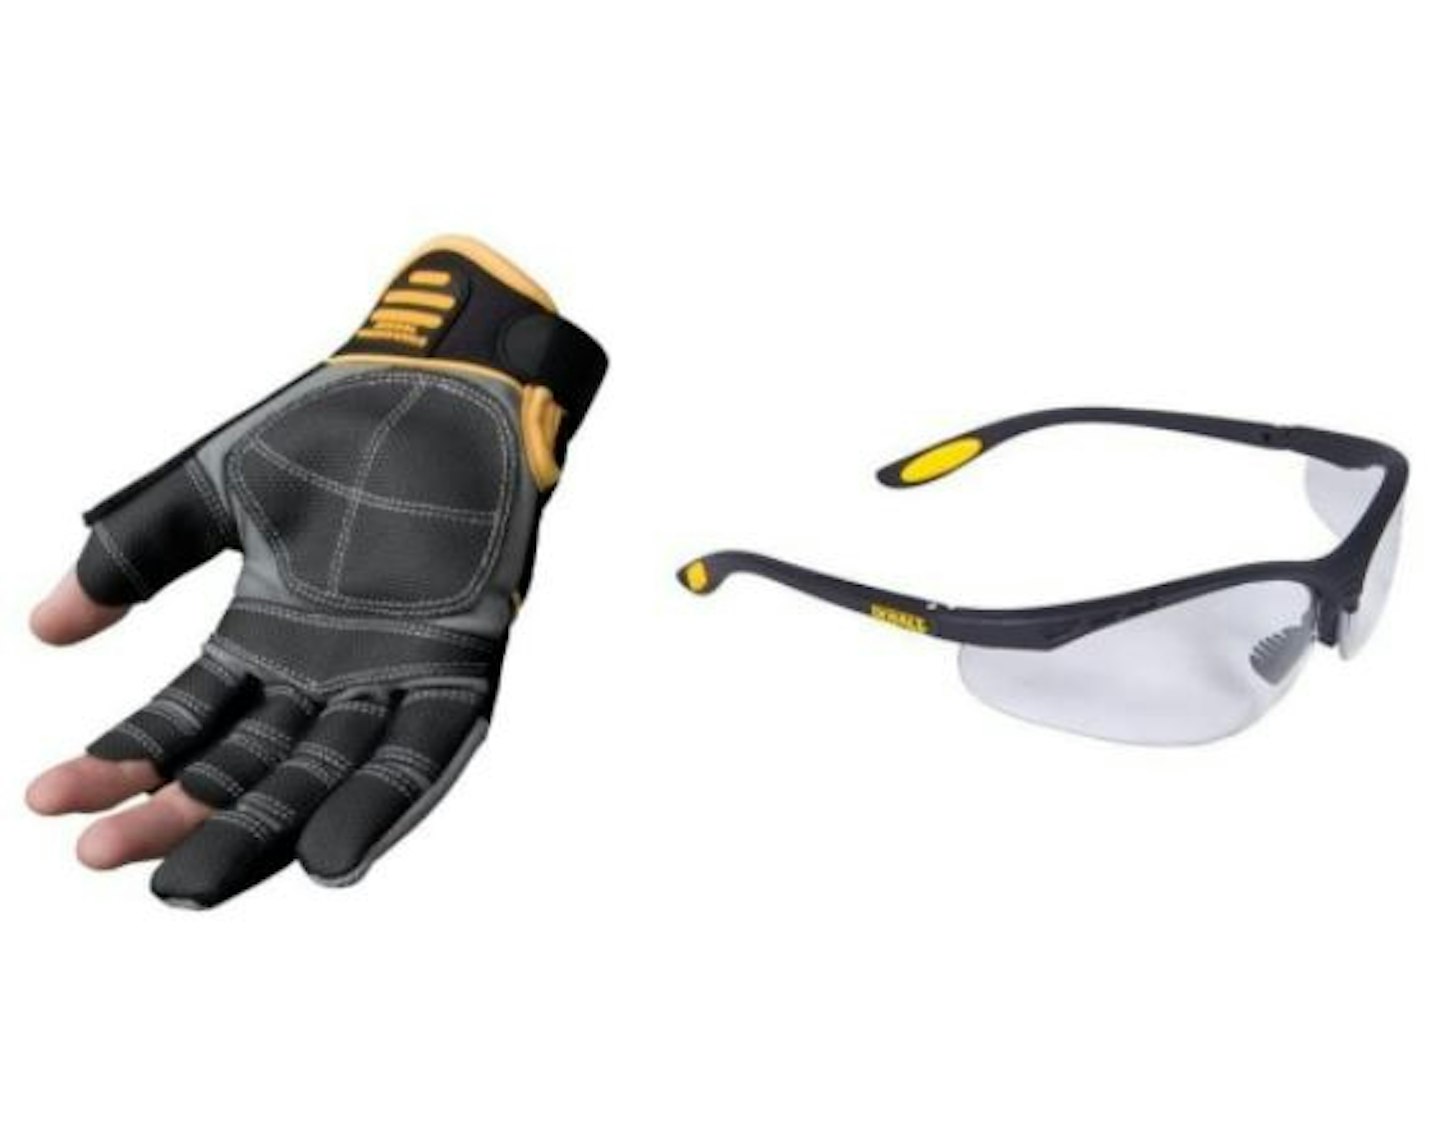 DeWalt Gloves & Glasses Combo